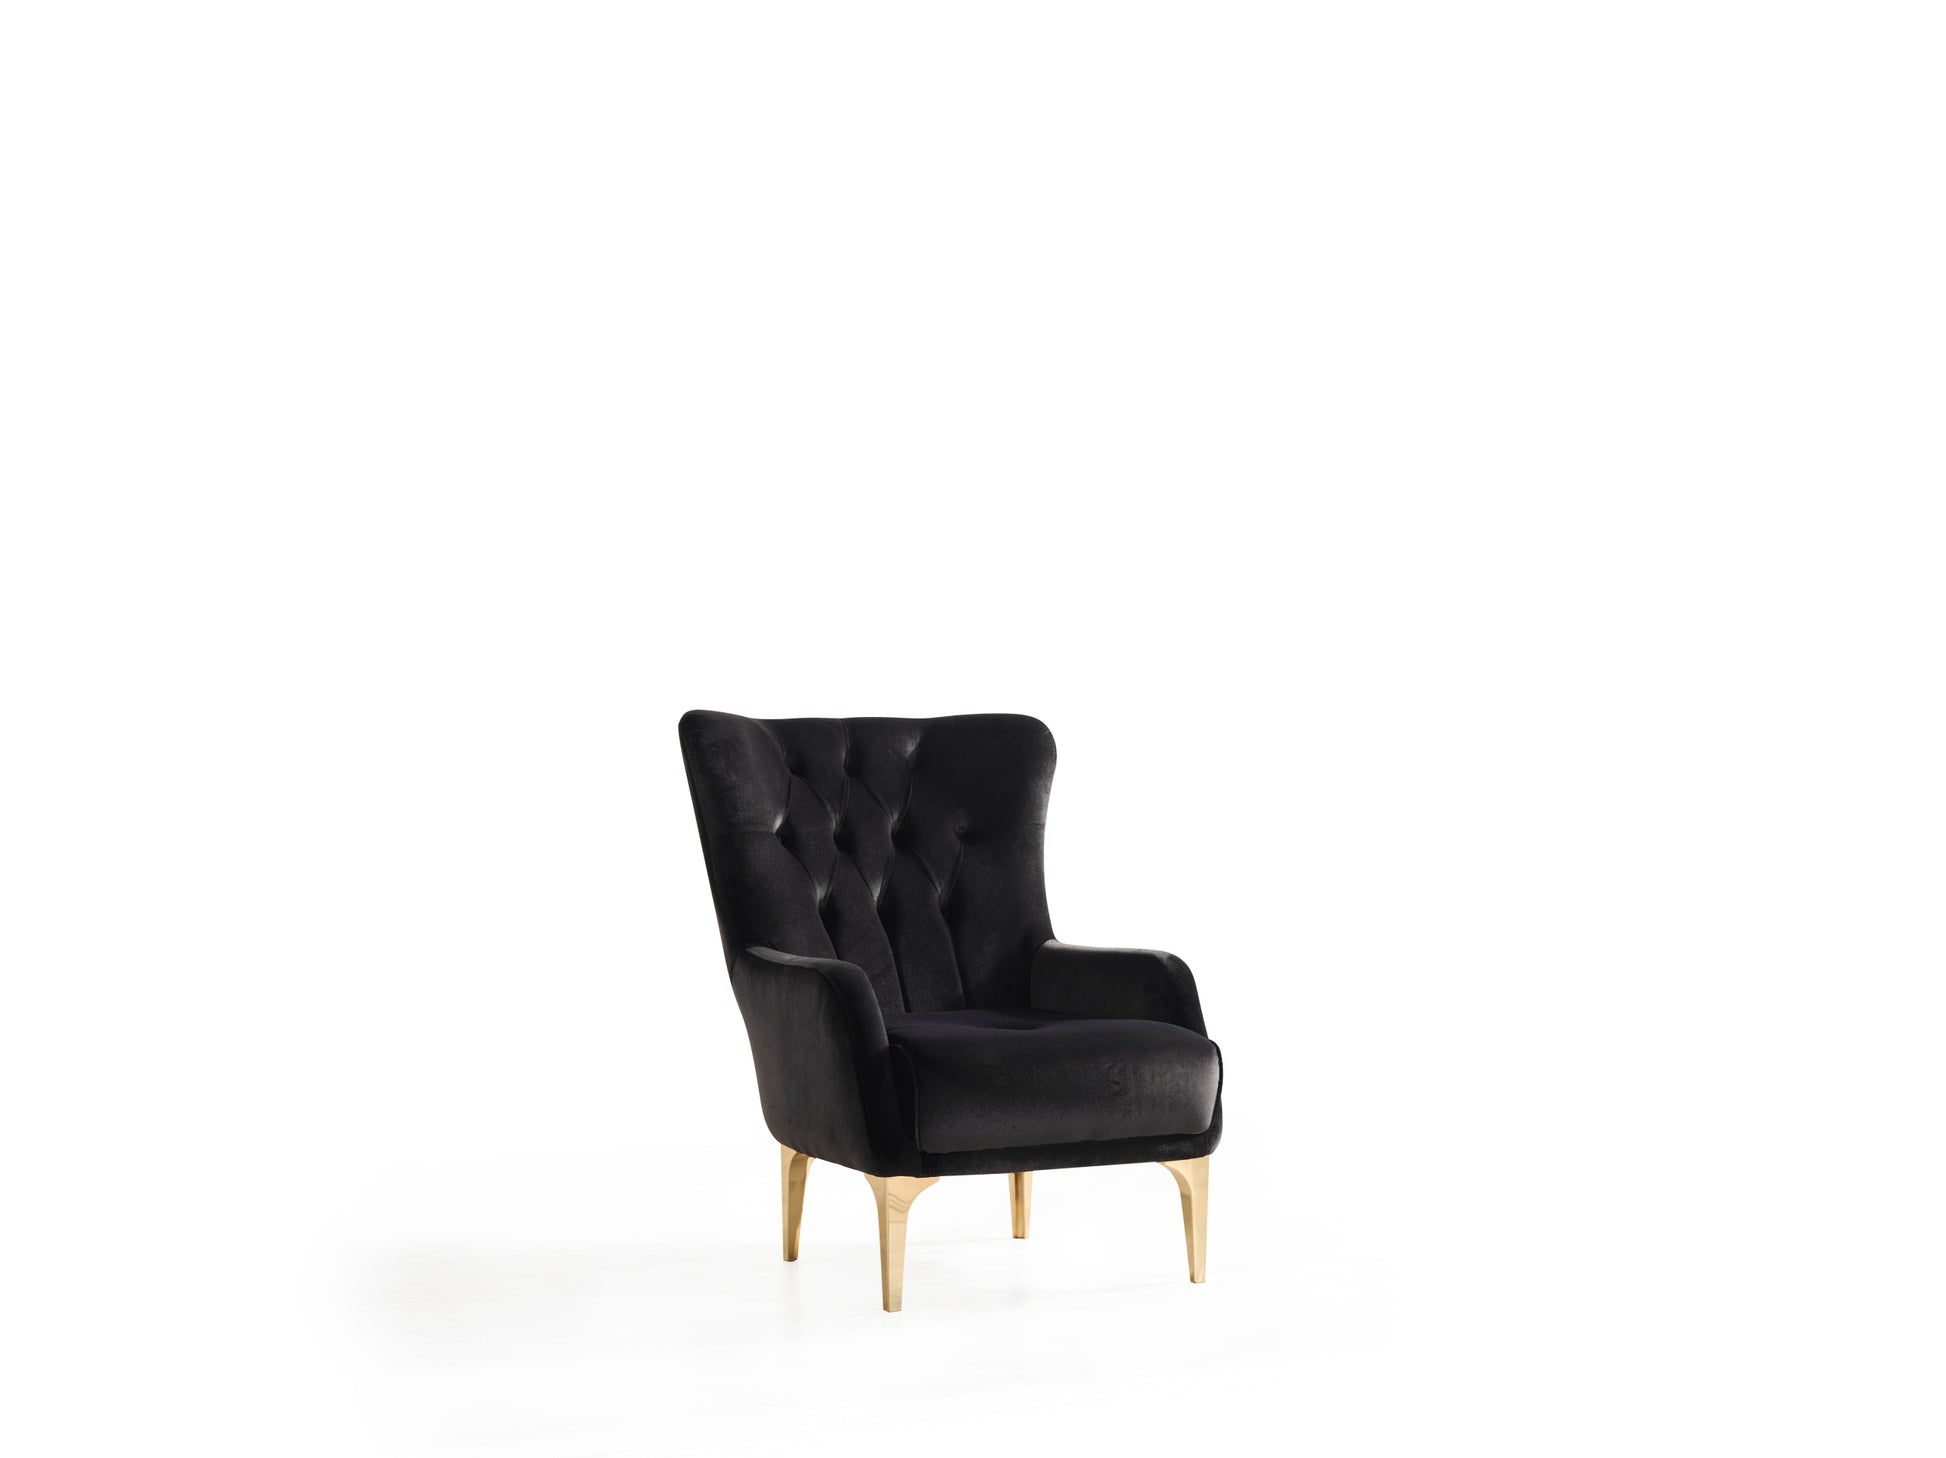 Lust Modern Style Chair in Black black-modern-upholstered-wood